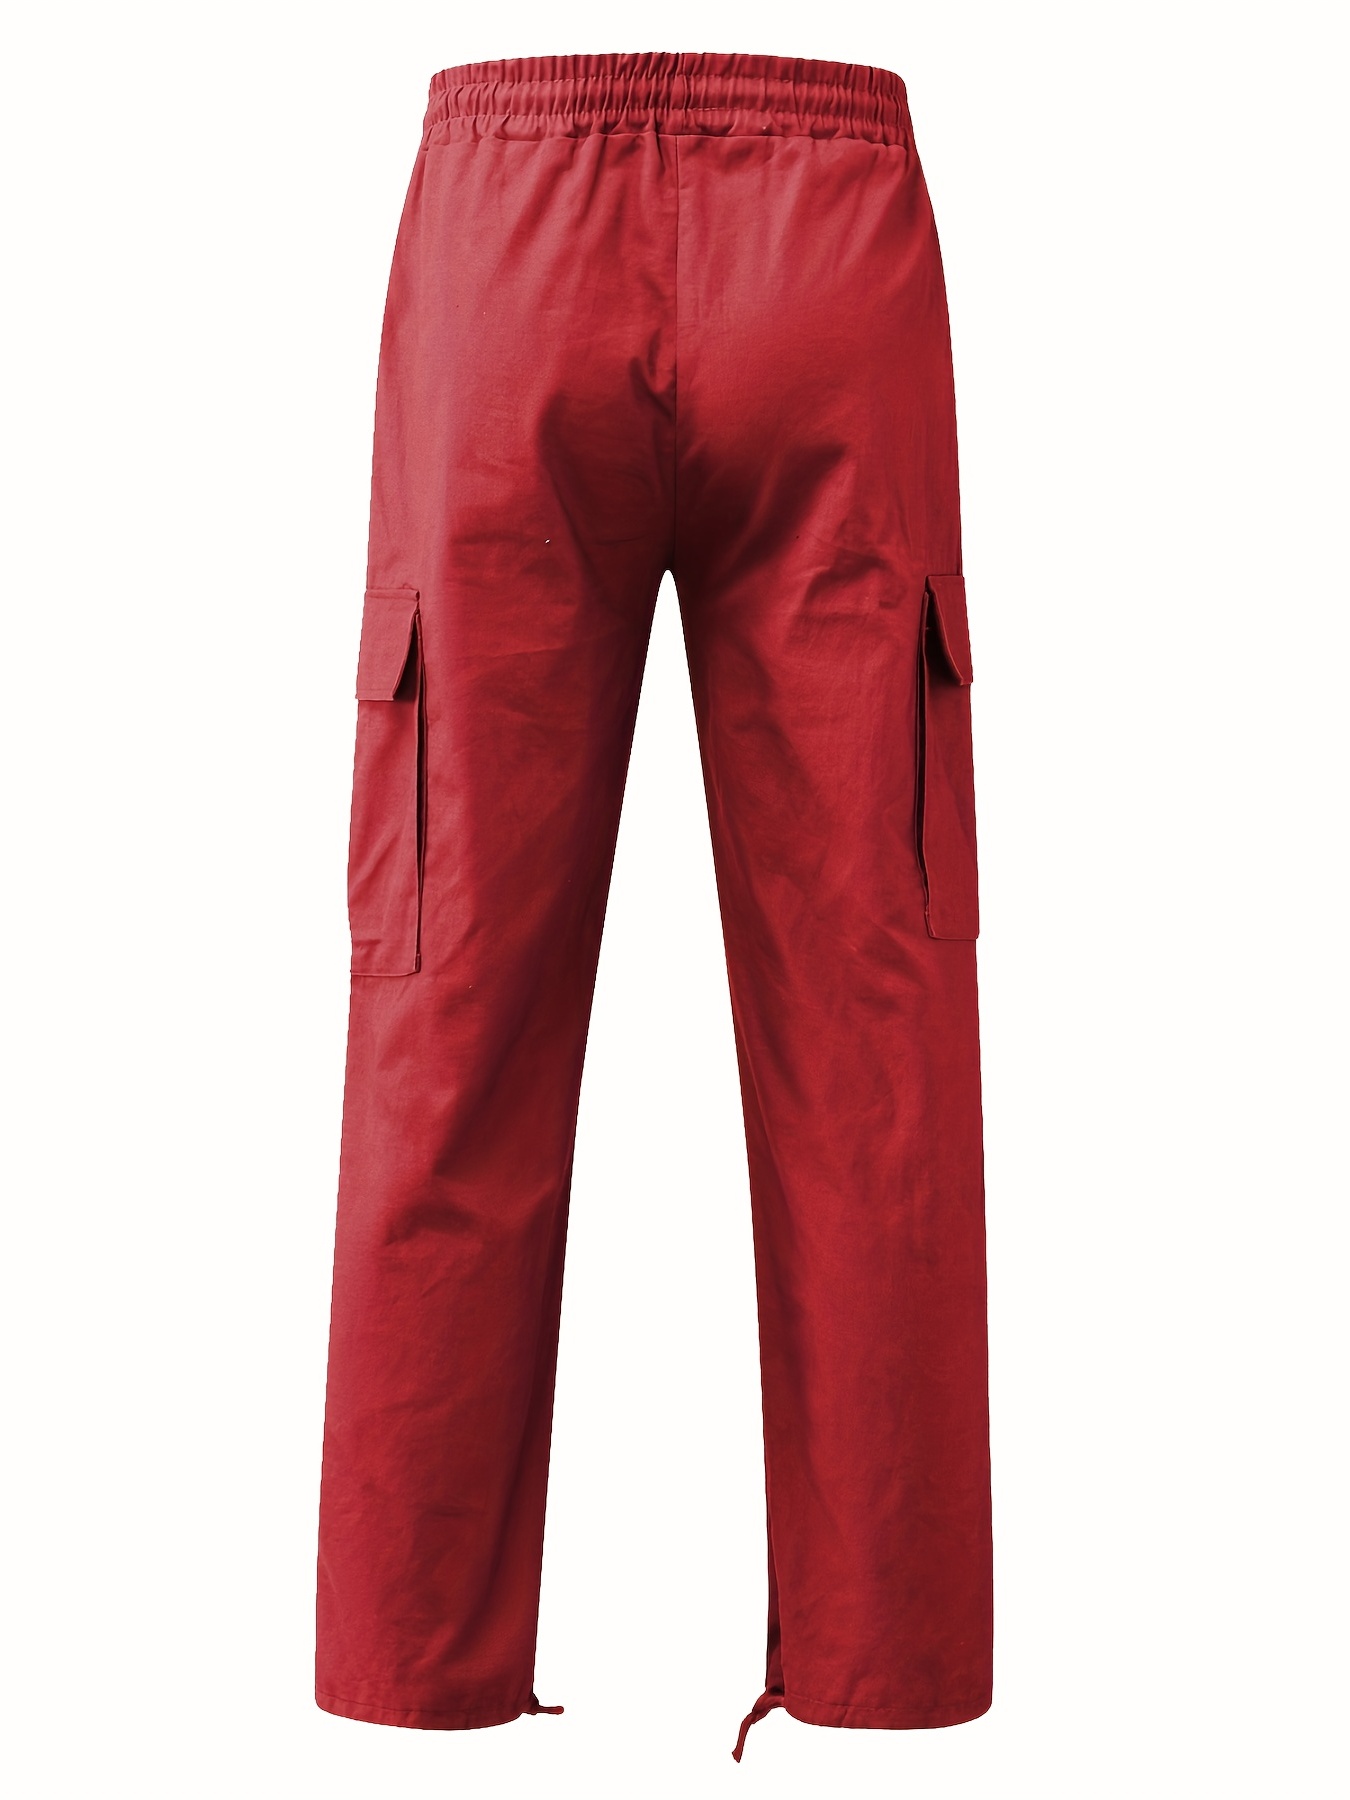  Boys Cargo Pants Cotton Casual Pants Elastic Waist Hiking  School Uniform Sweatpants Joggers (Wine Red, 6-7): Clothing, Shoes & Jewelry